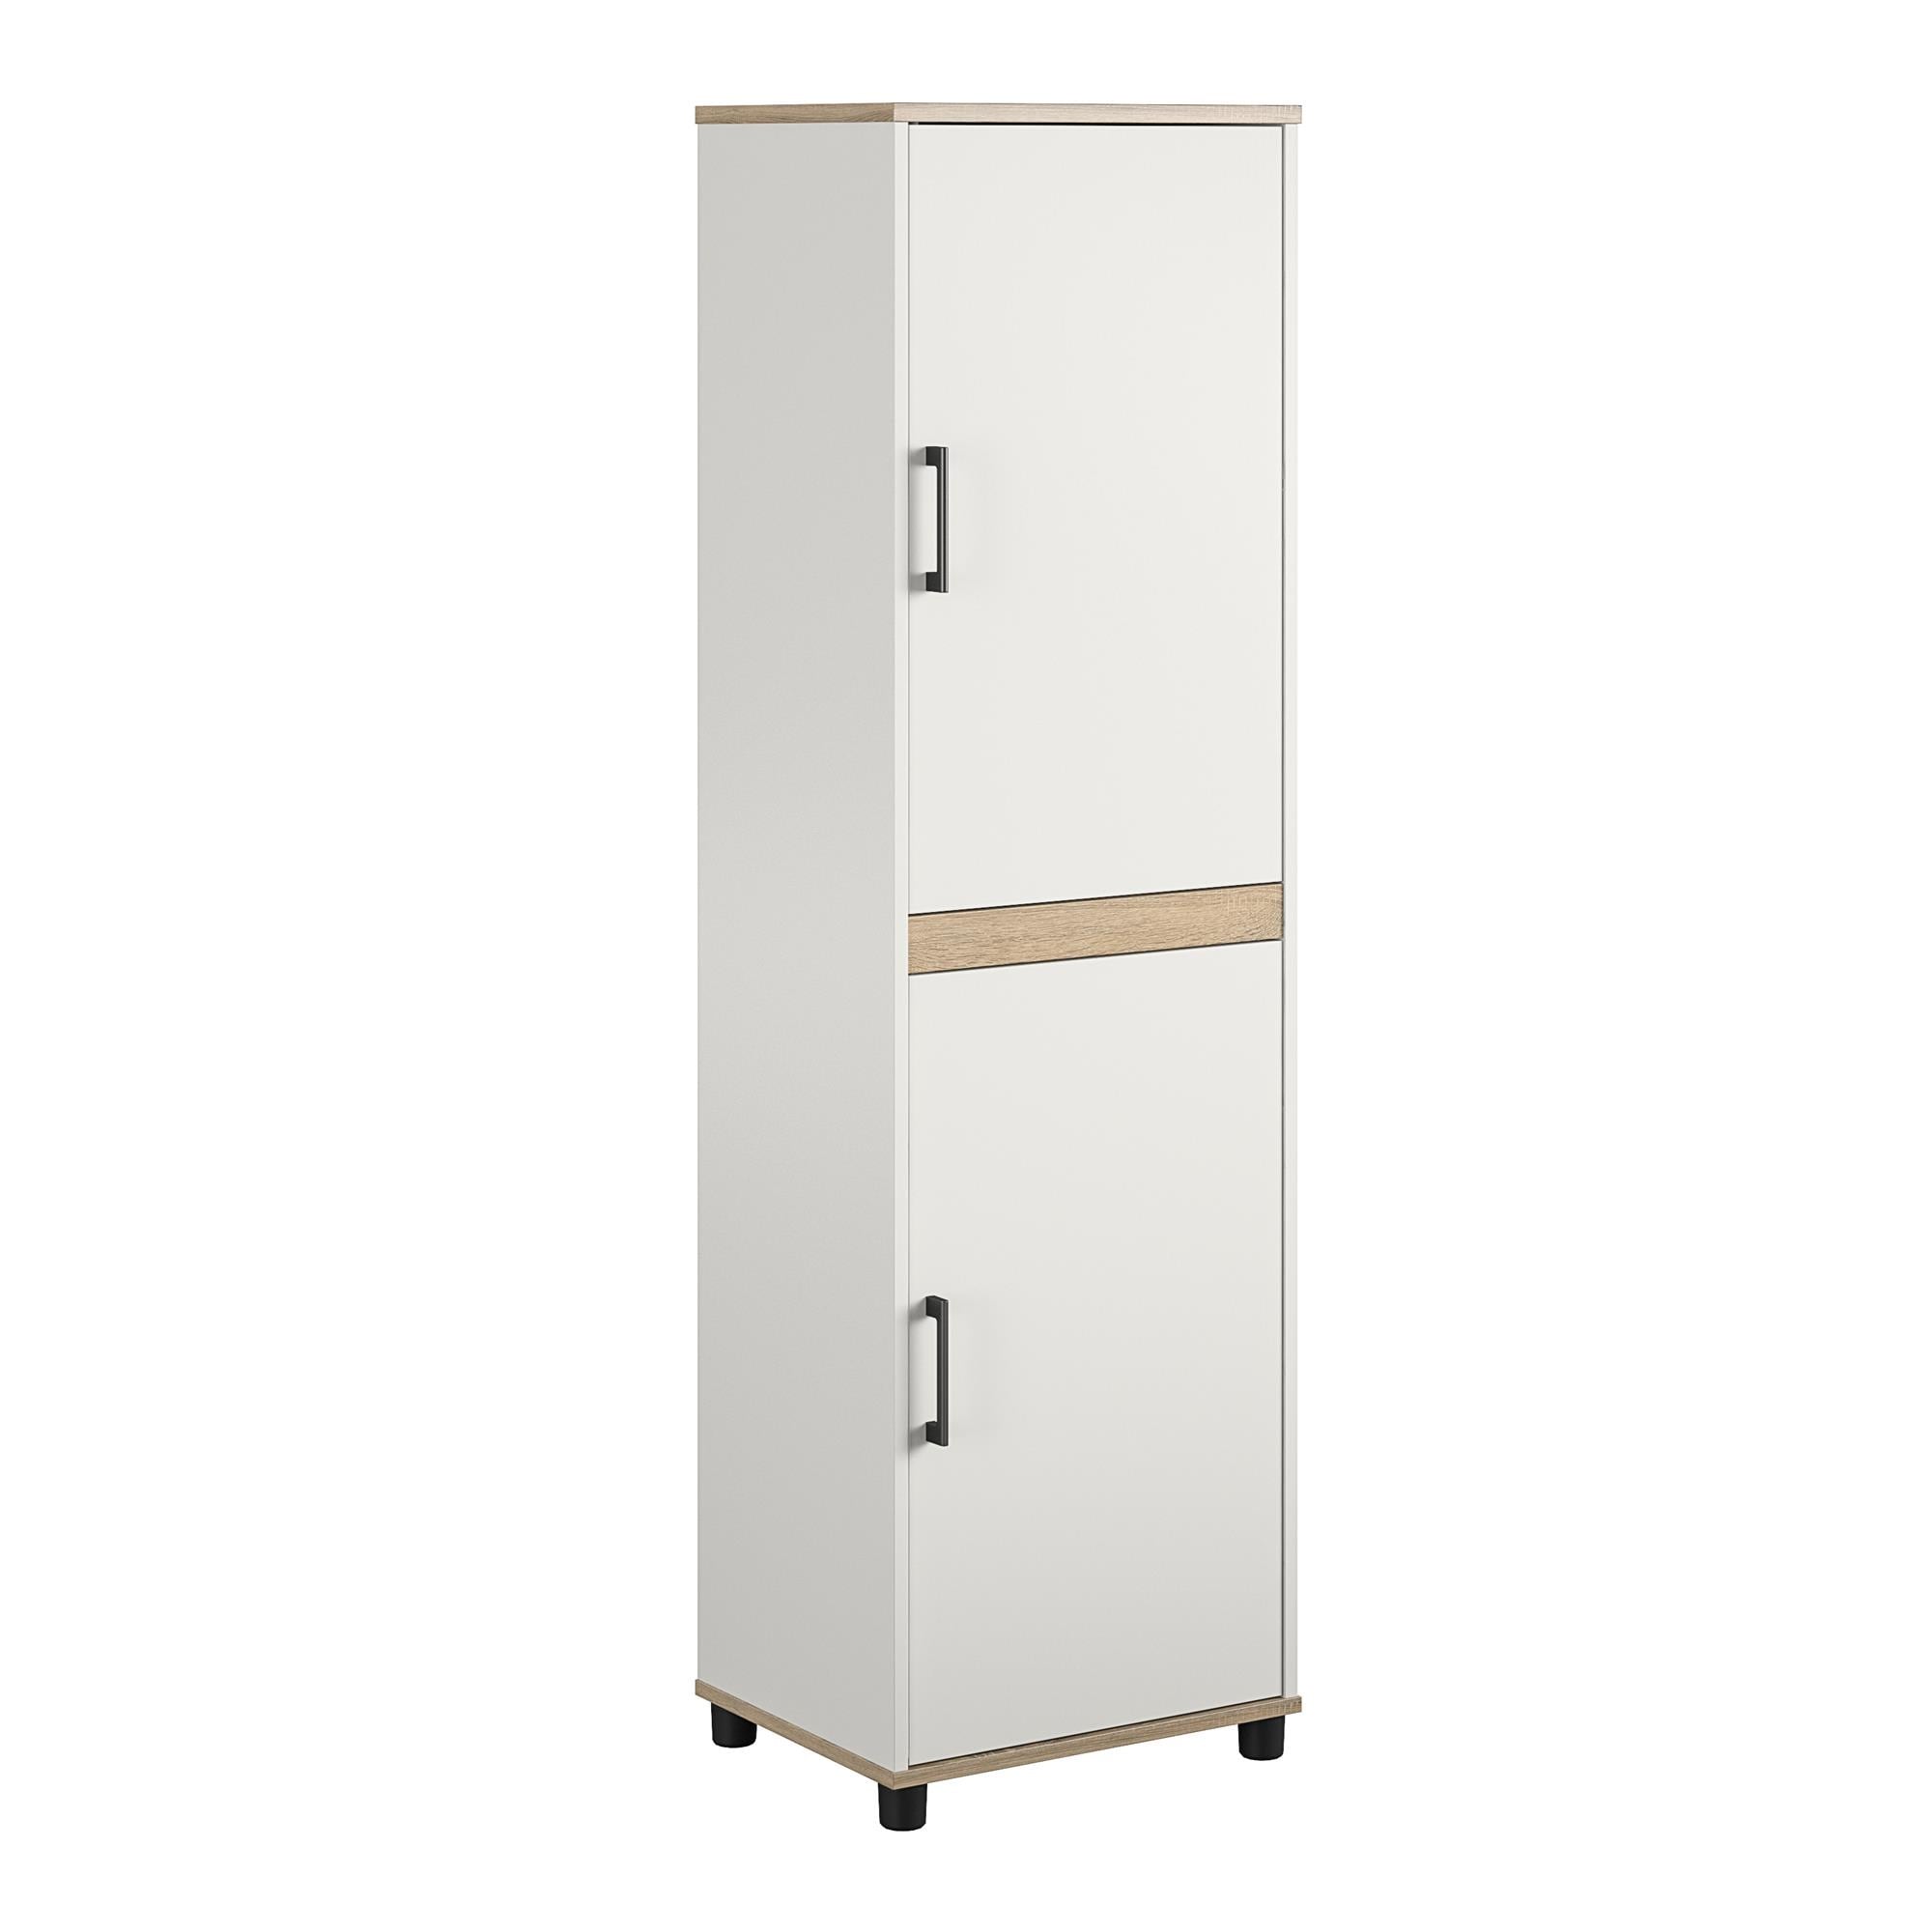 Systembuild Evolution Wellington 2 Door Kitchen Pantry Cabinet